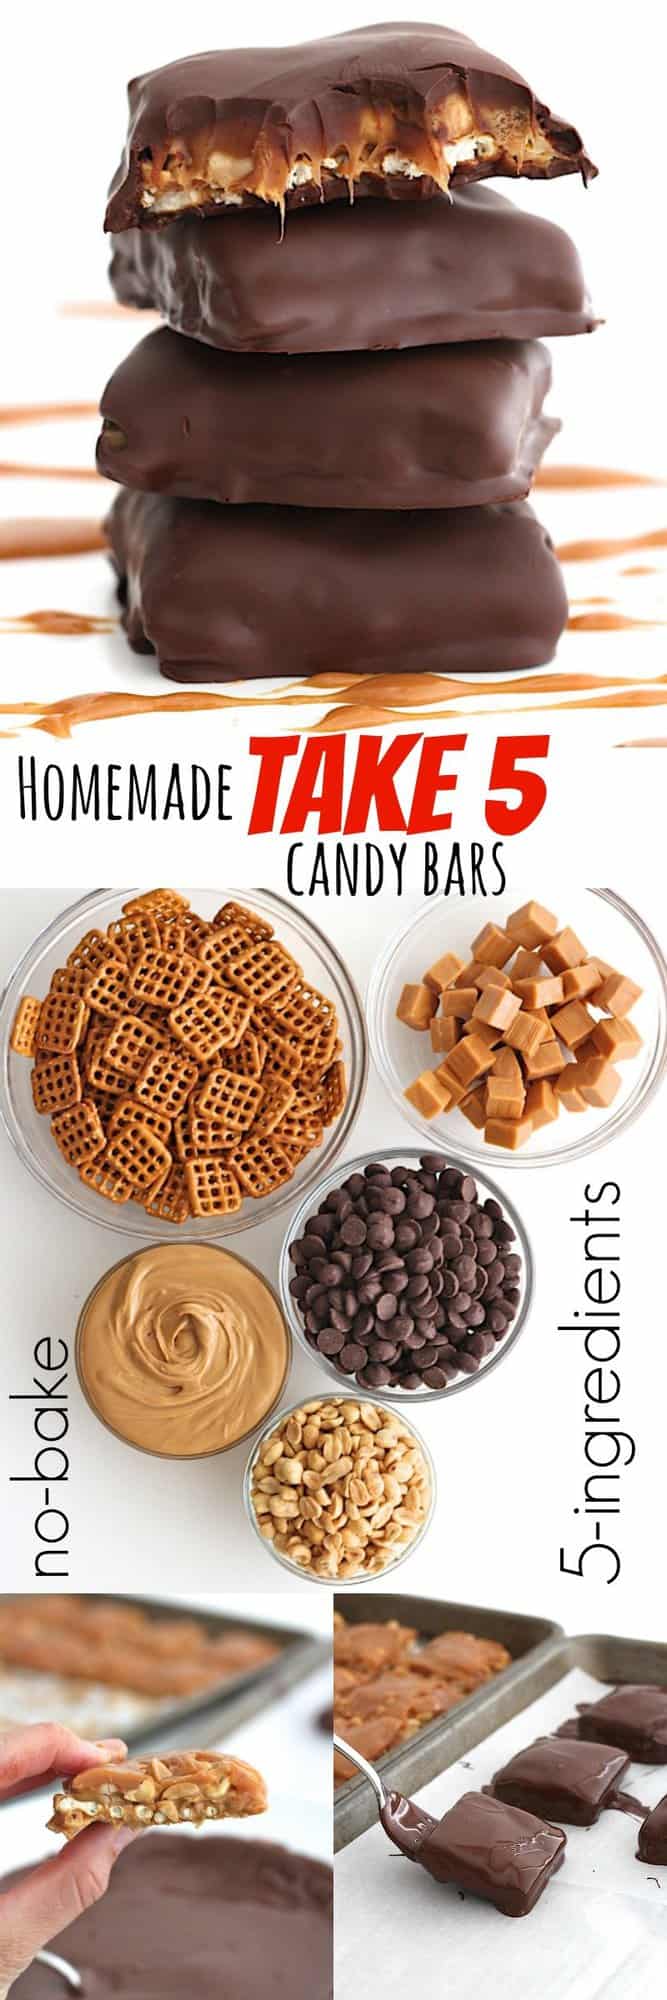 Homemade Take 5 Candy Bars | The BakerMama